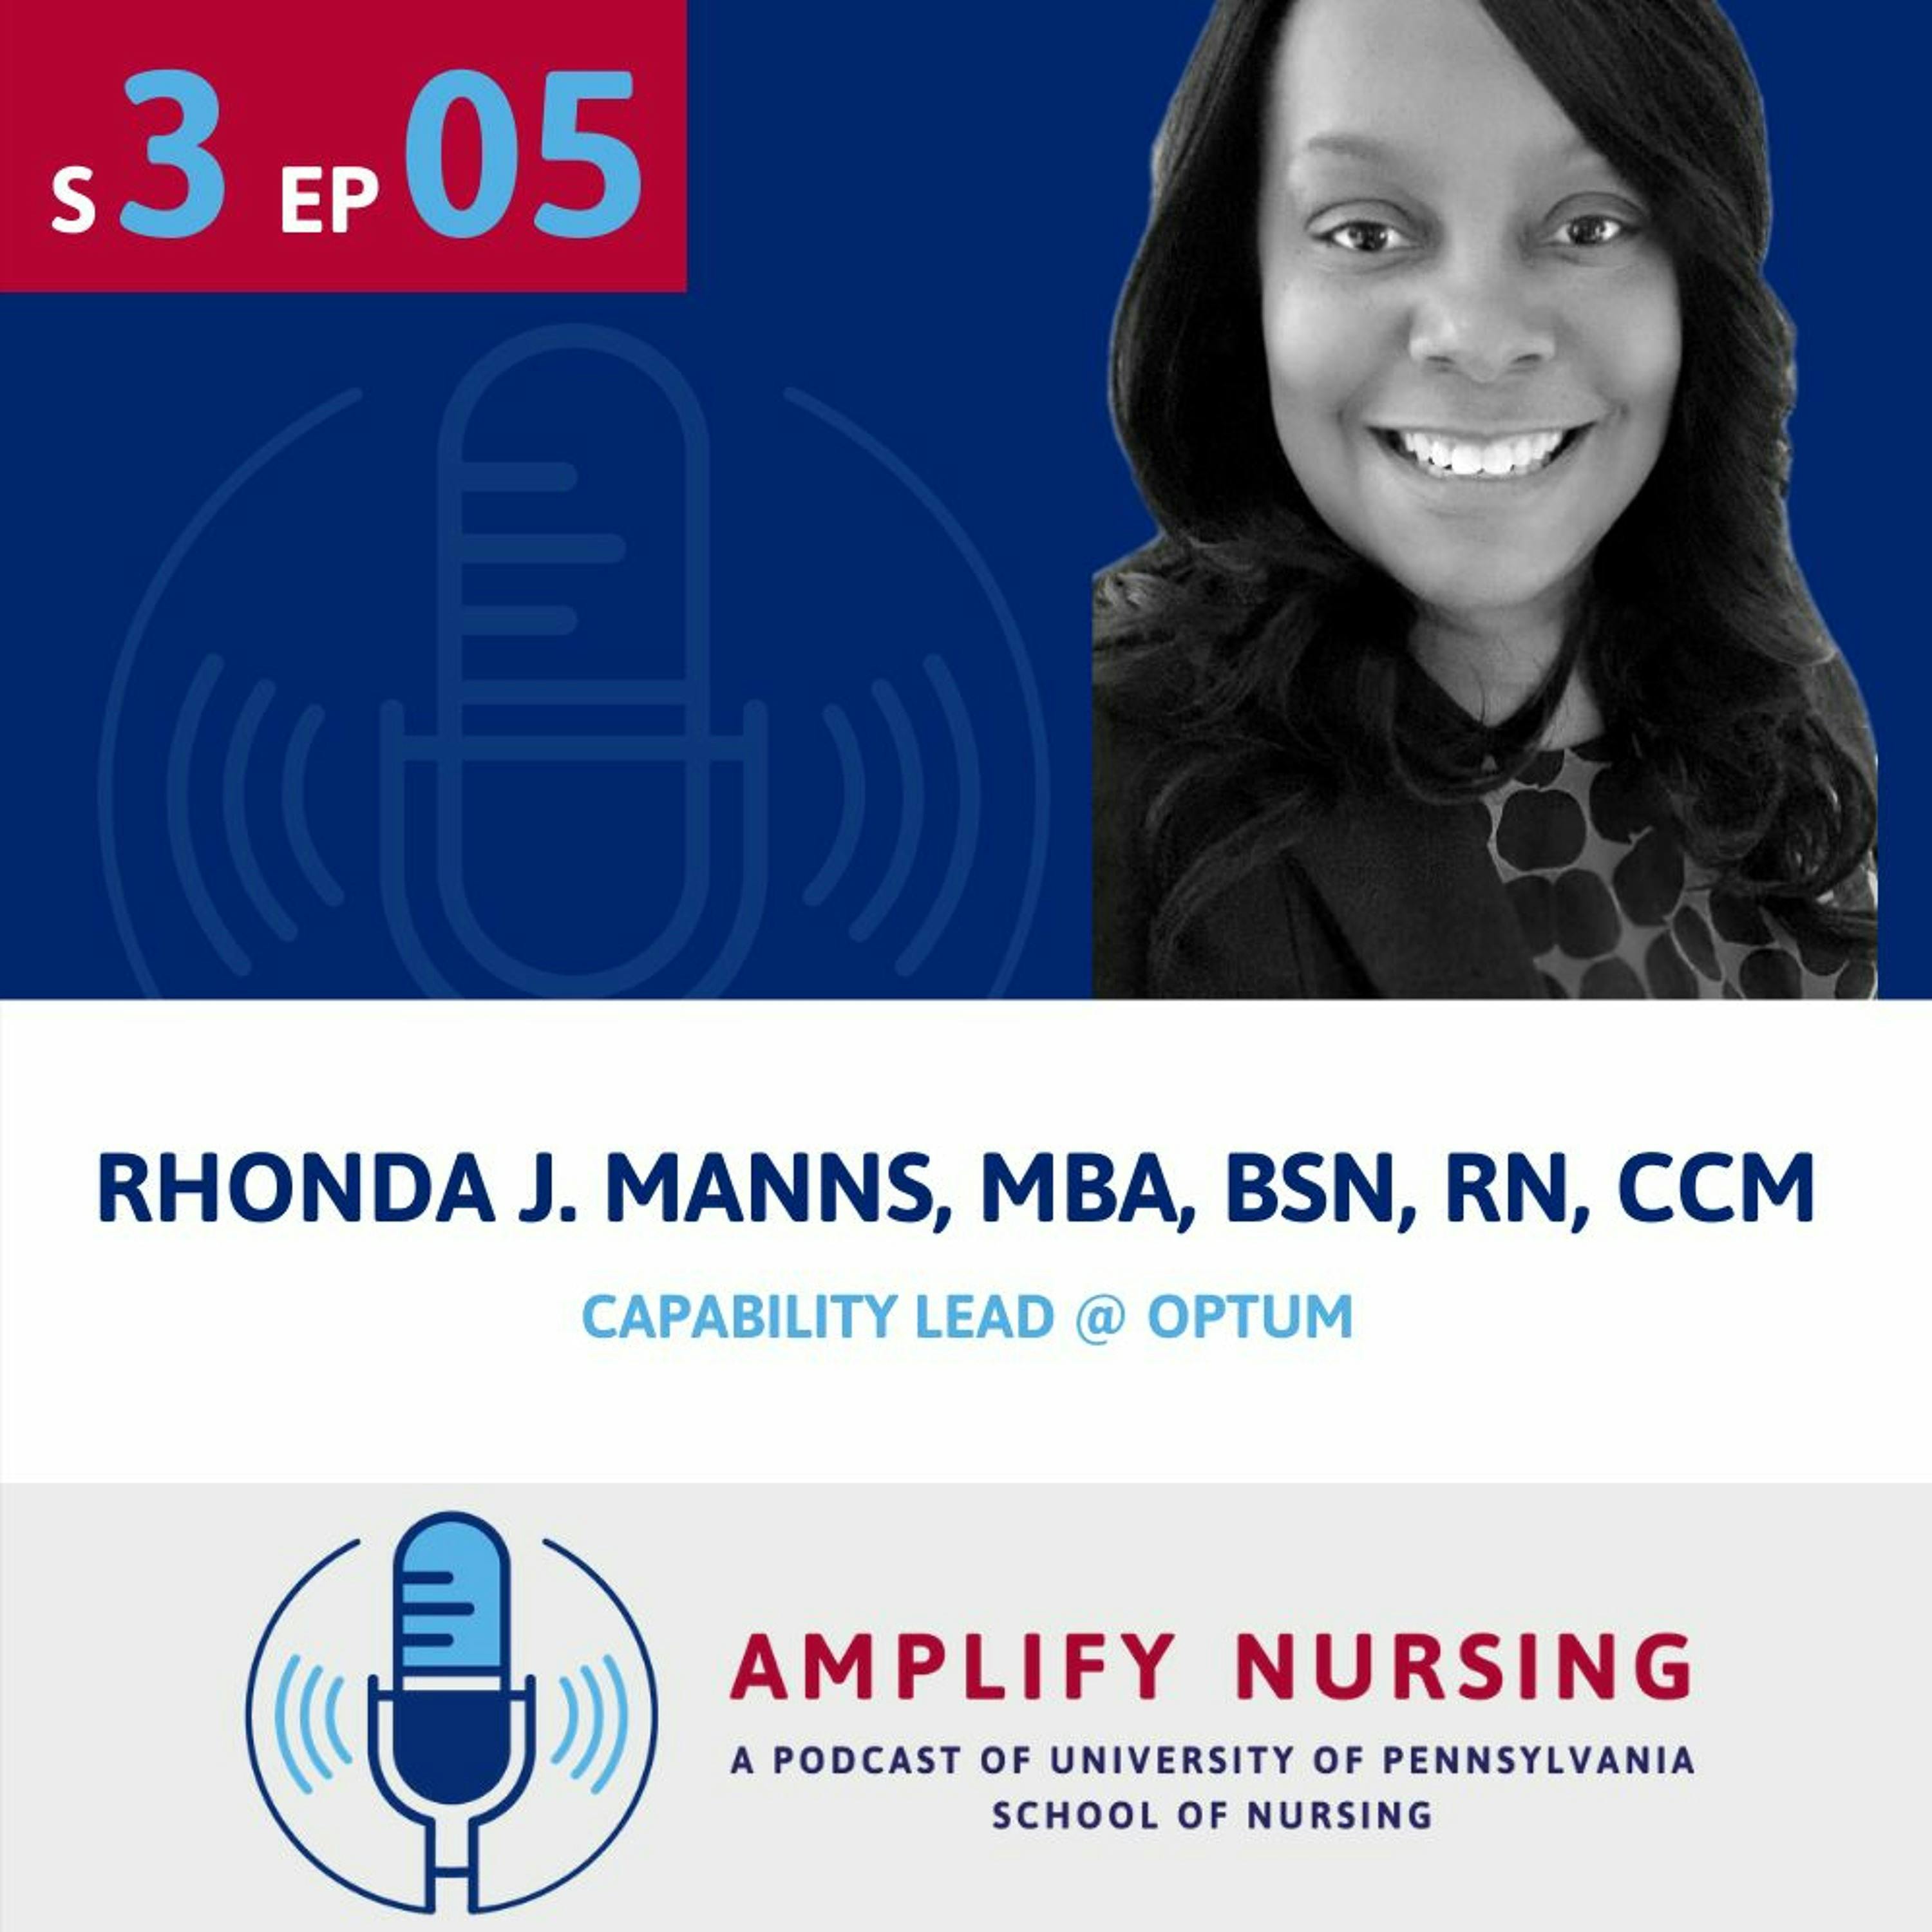 Amplify Nursing: Innovation, Business and Diversity in Nursing with Rhonda Manns